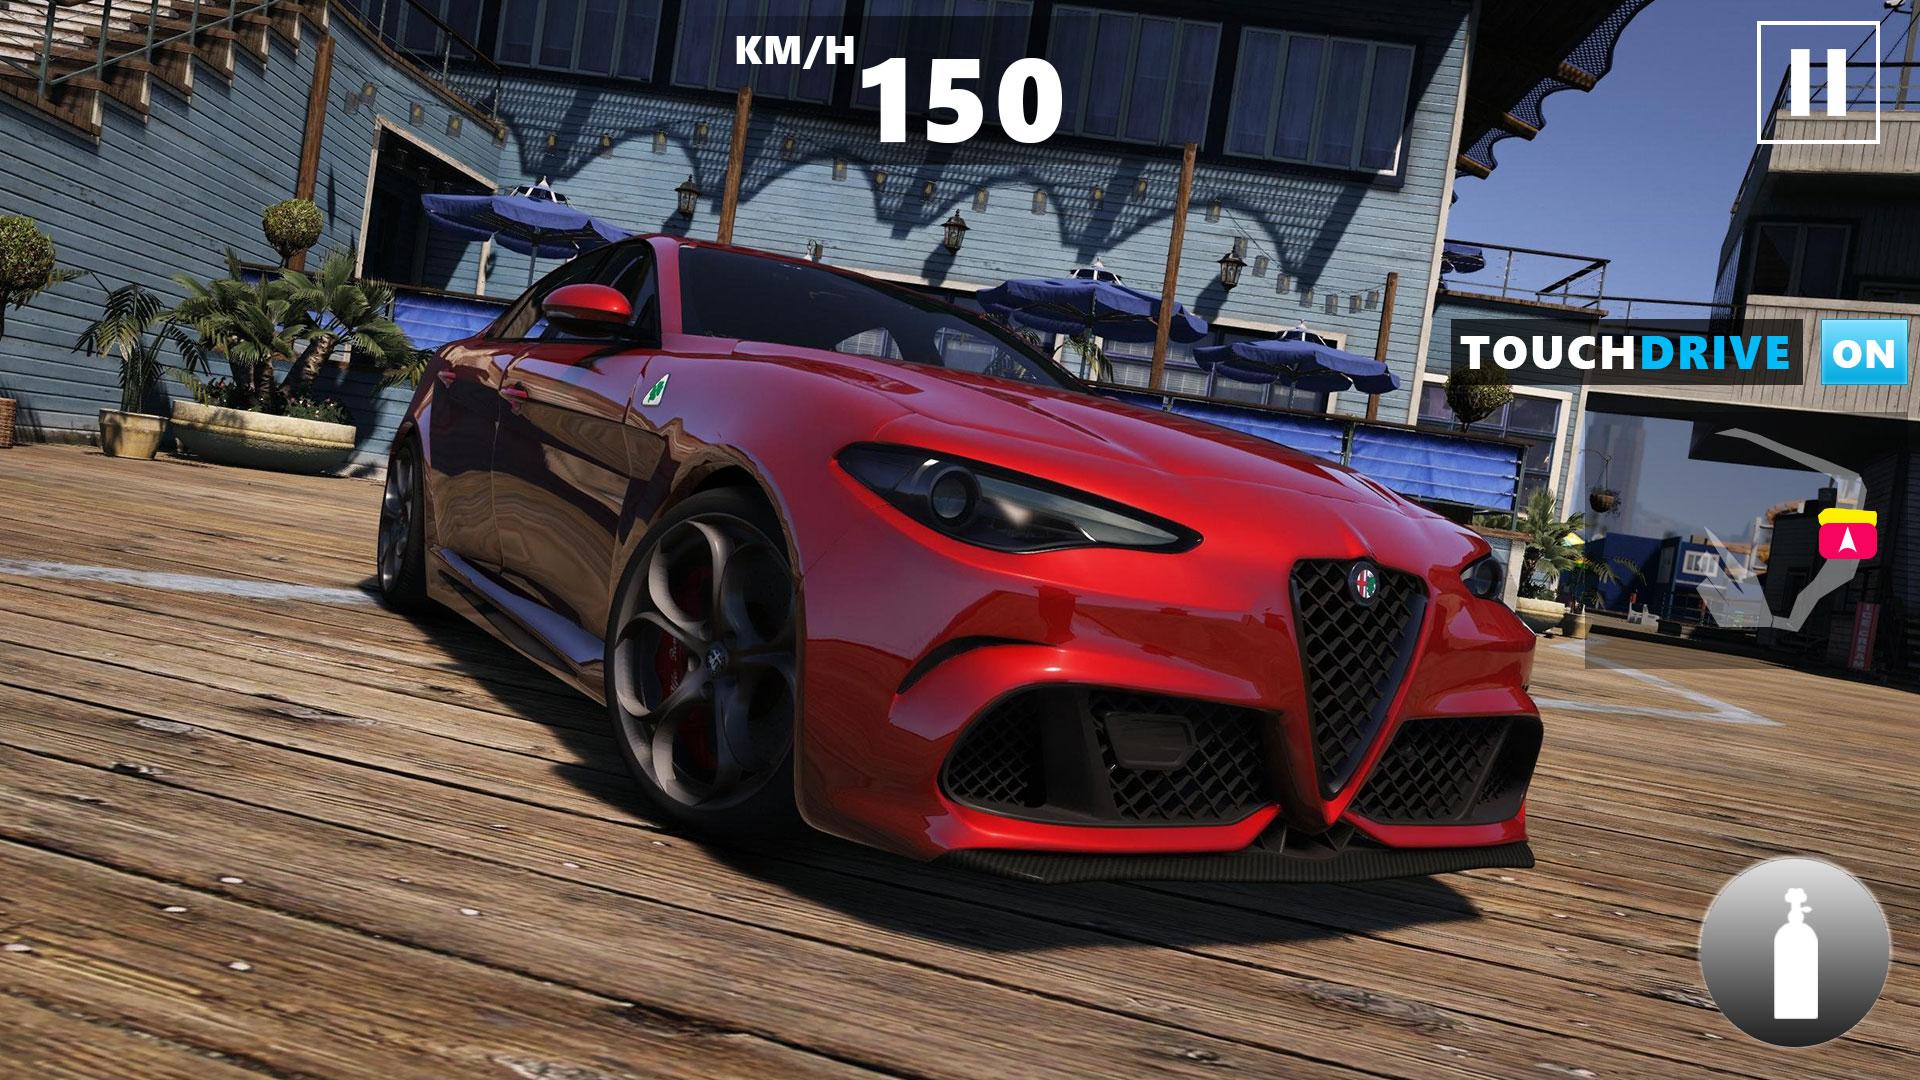 Romeo Giulietta Extreme City Car Drift & Drive 1.0 Screenshot 13